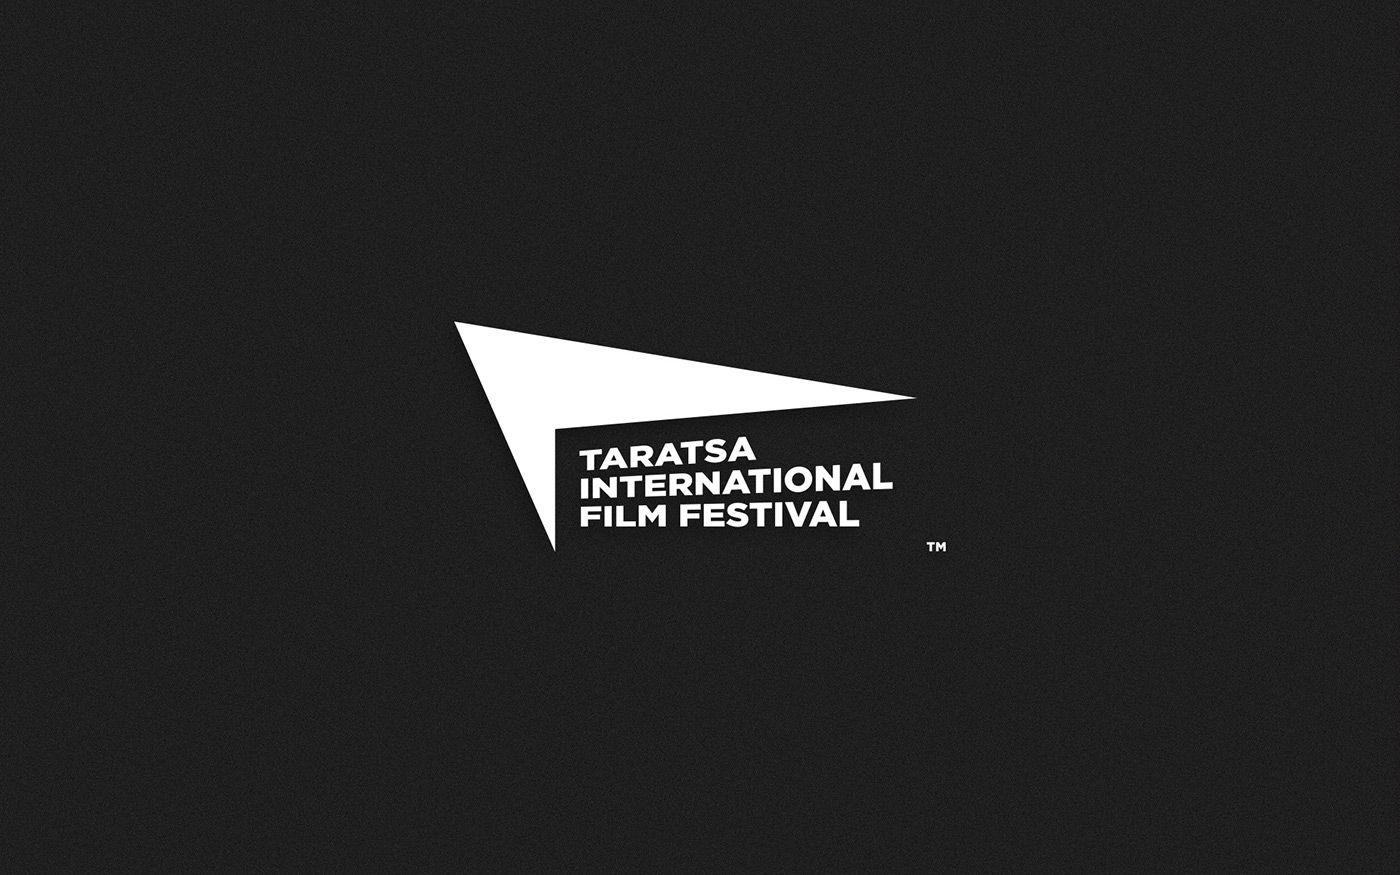 taratsa film festival Logotype Cinema festival